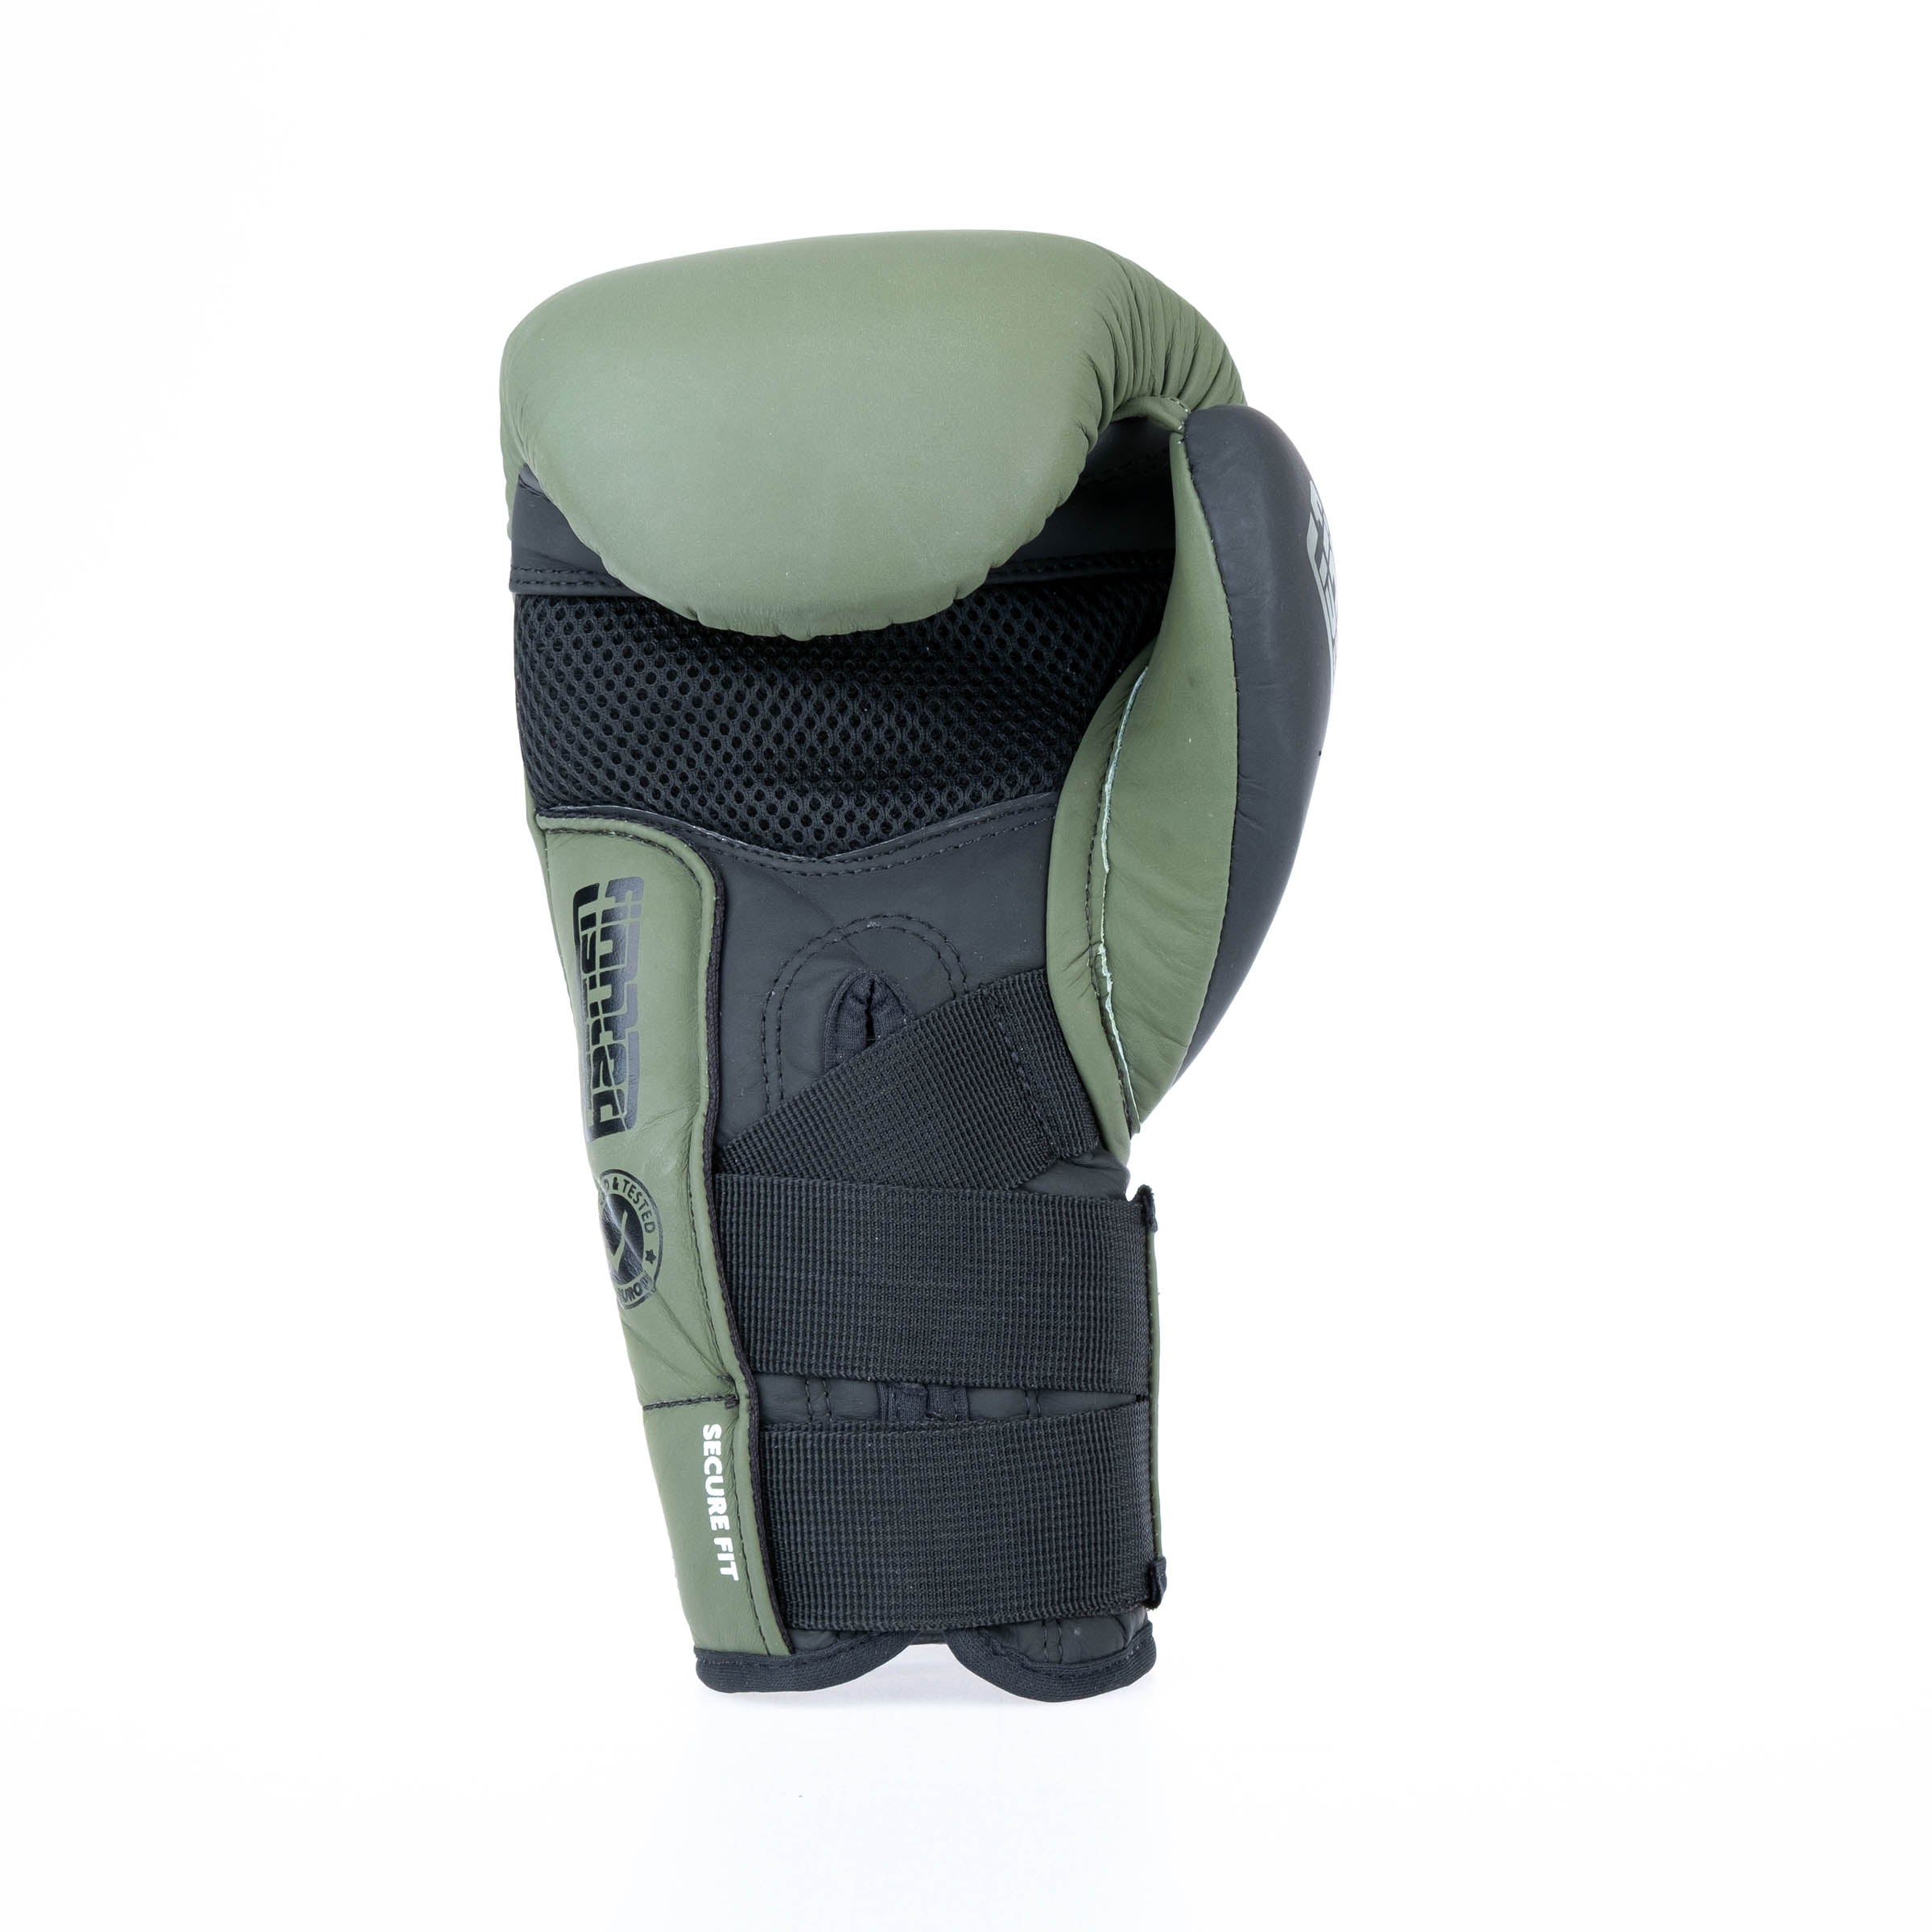 Fighter Boxing Gloves Secure Fit - khaki/black